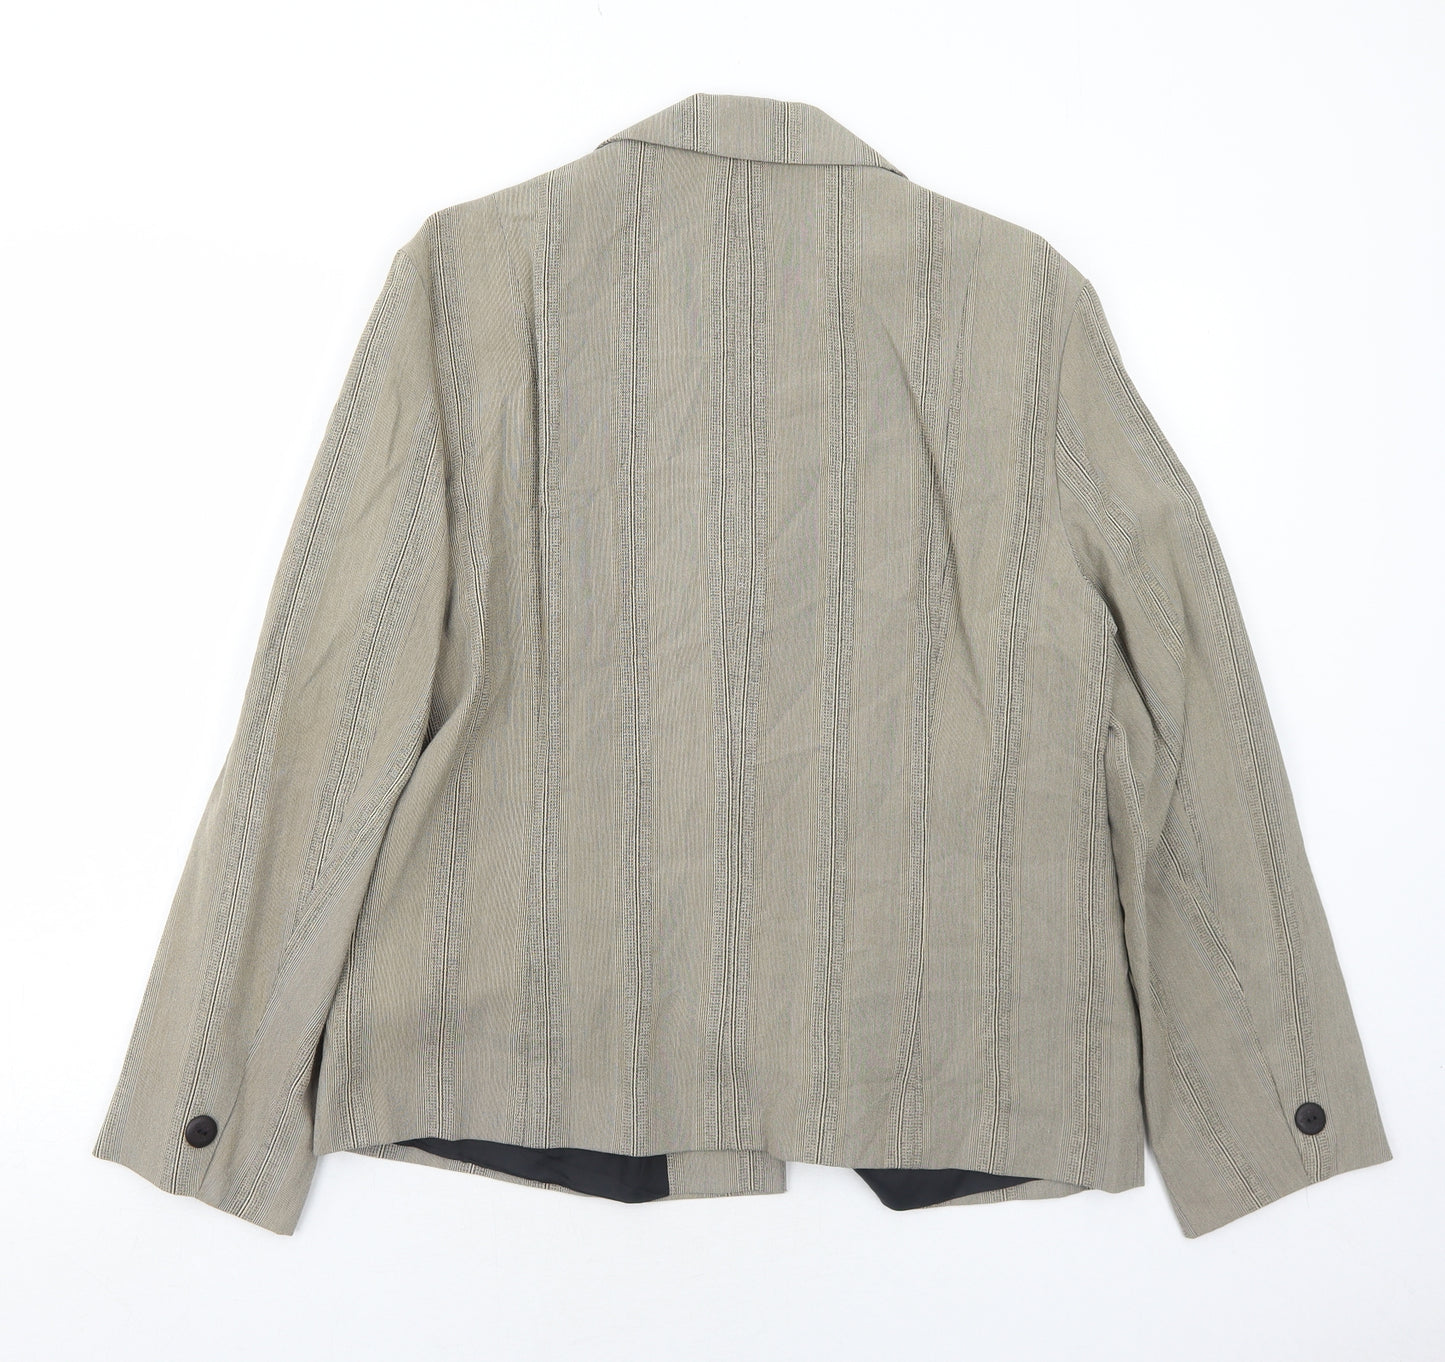 Wallis Womens Beige Geometric Viscose Jacket Suit Jacket Size 16